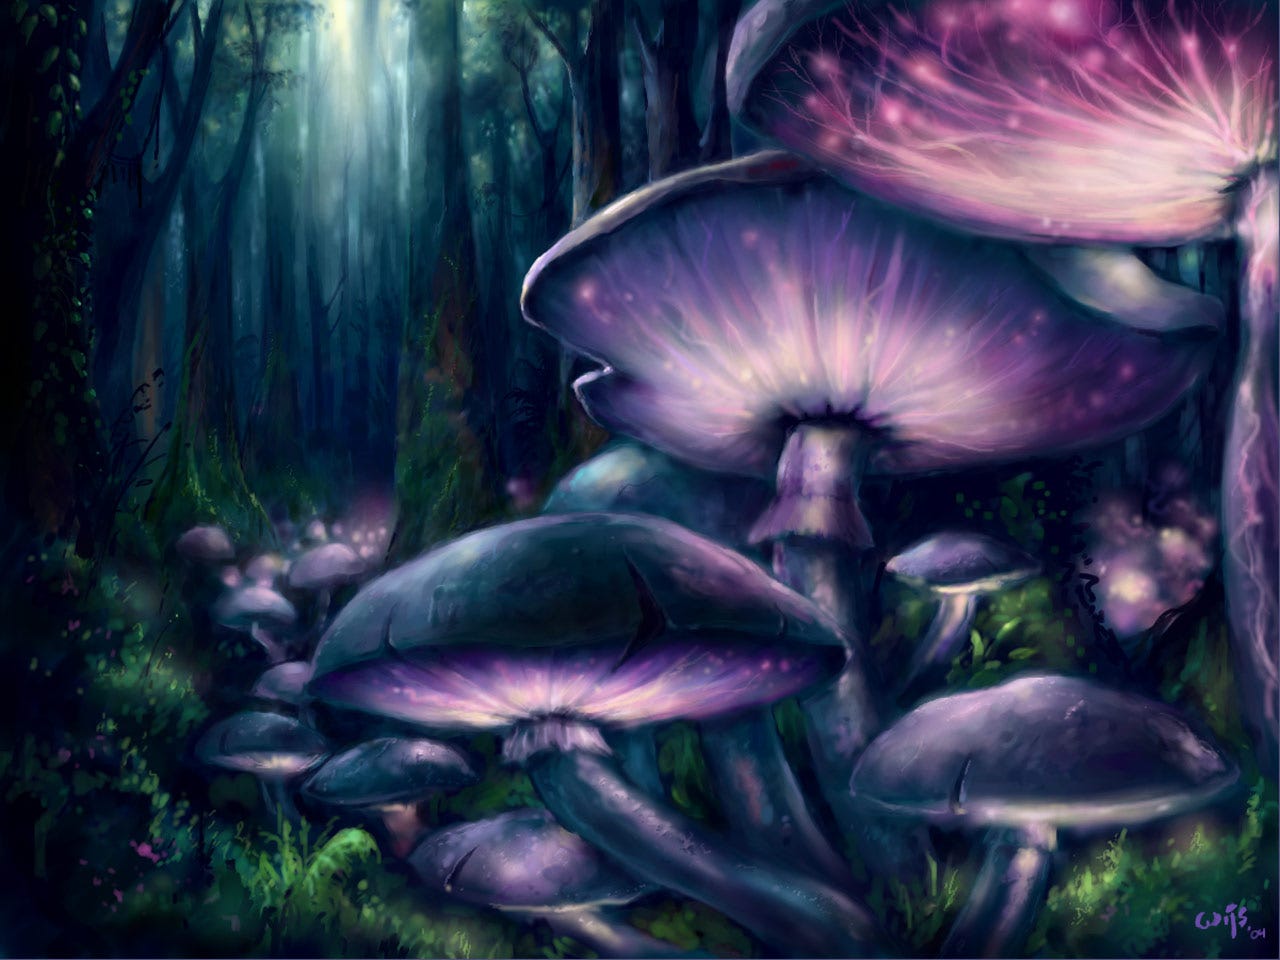 magic mushrooms by leukoula on DeviantArt